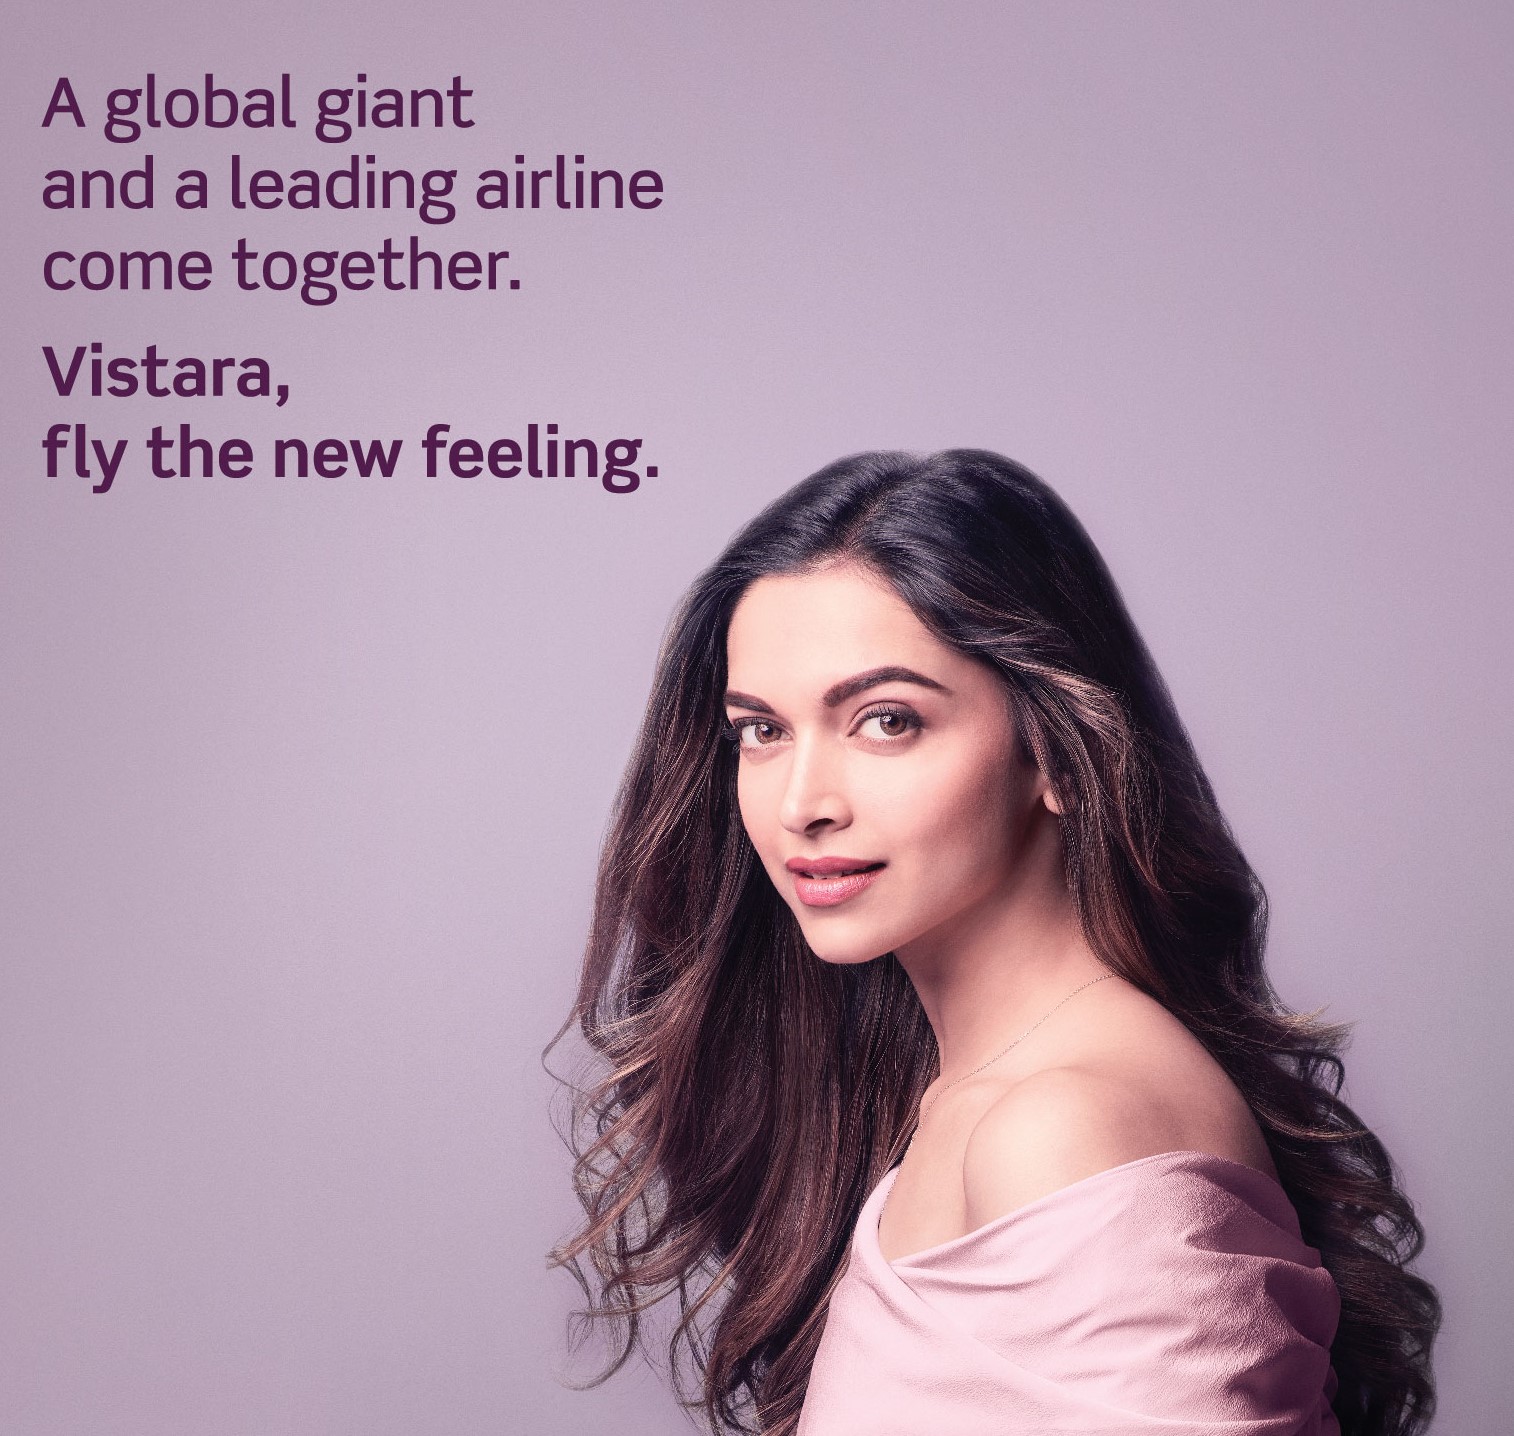 Qatar Airways announces Indian Superstar Deepika Padukone as